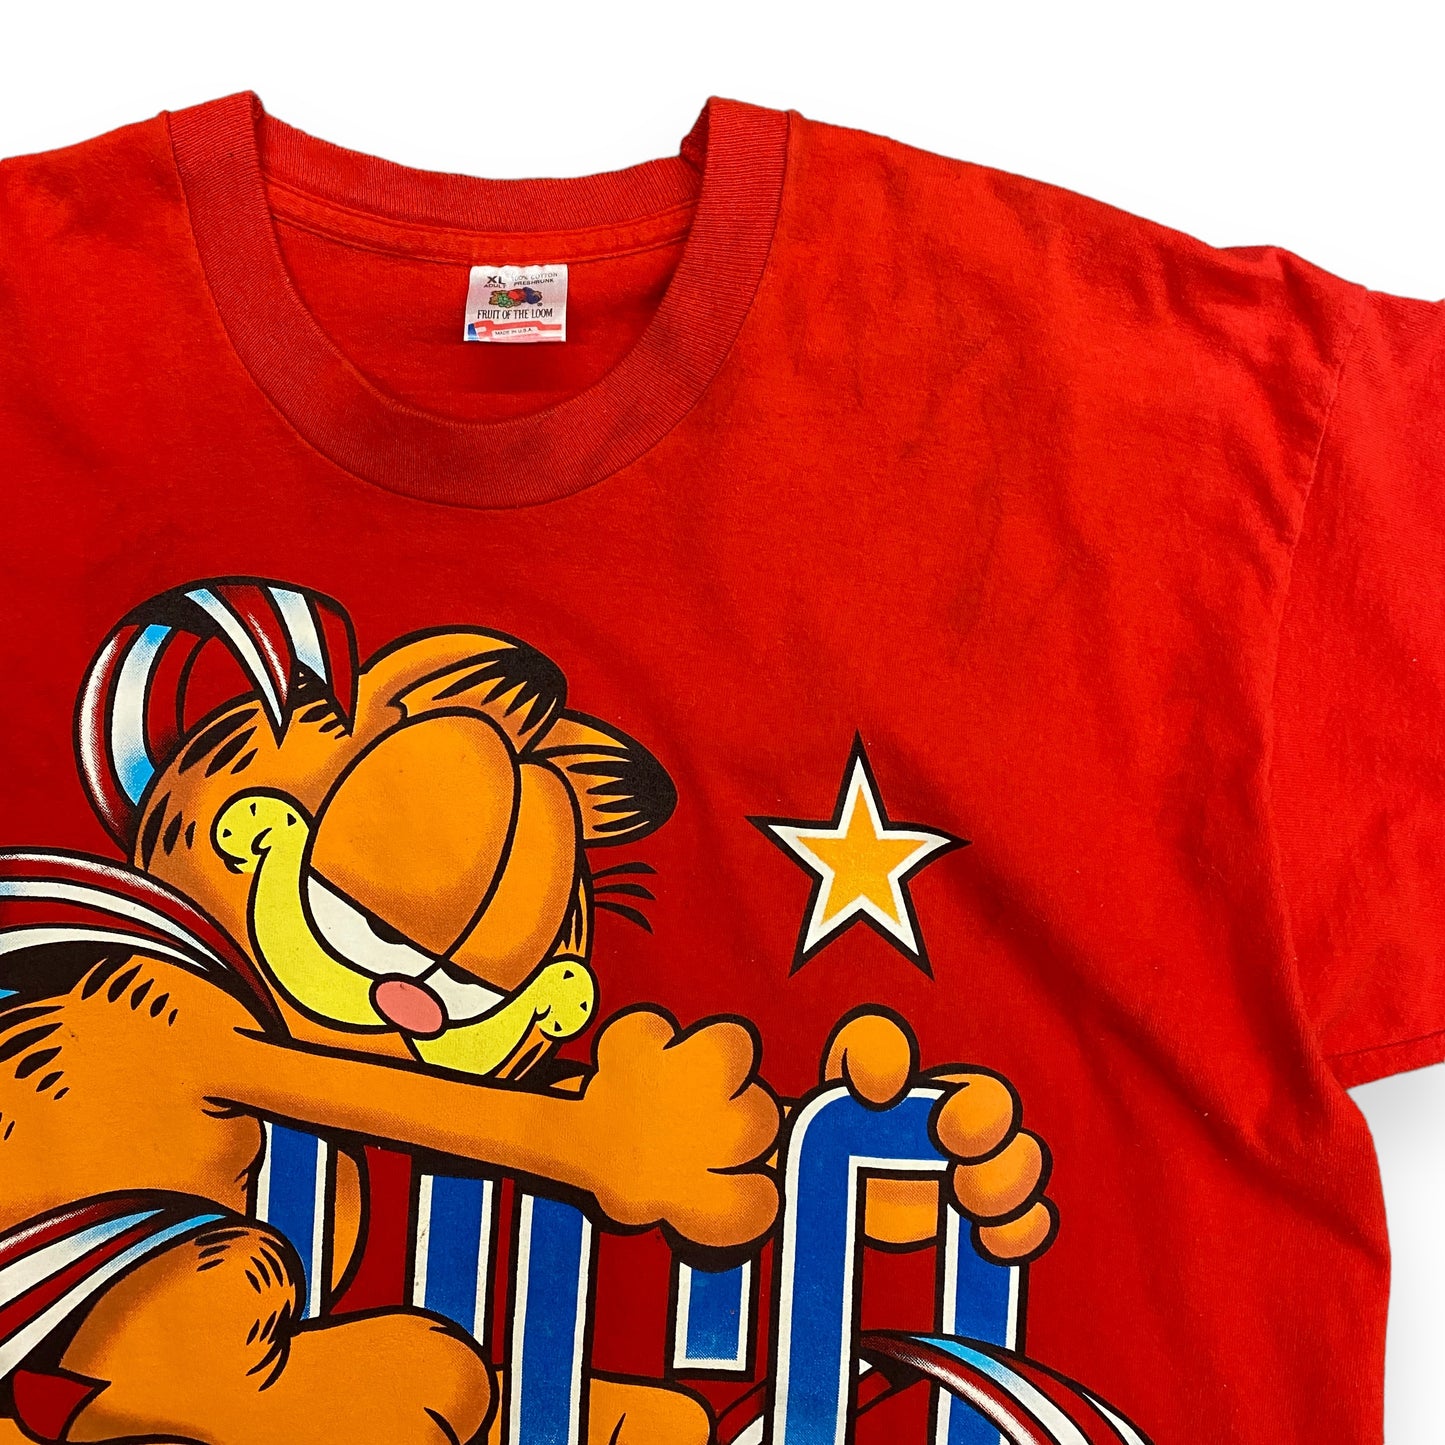 Vintage 1990s Garfield x USA Tee - Size XL